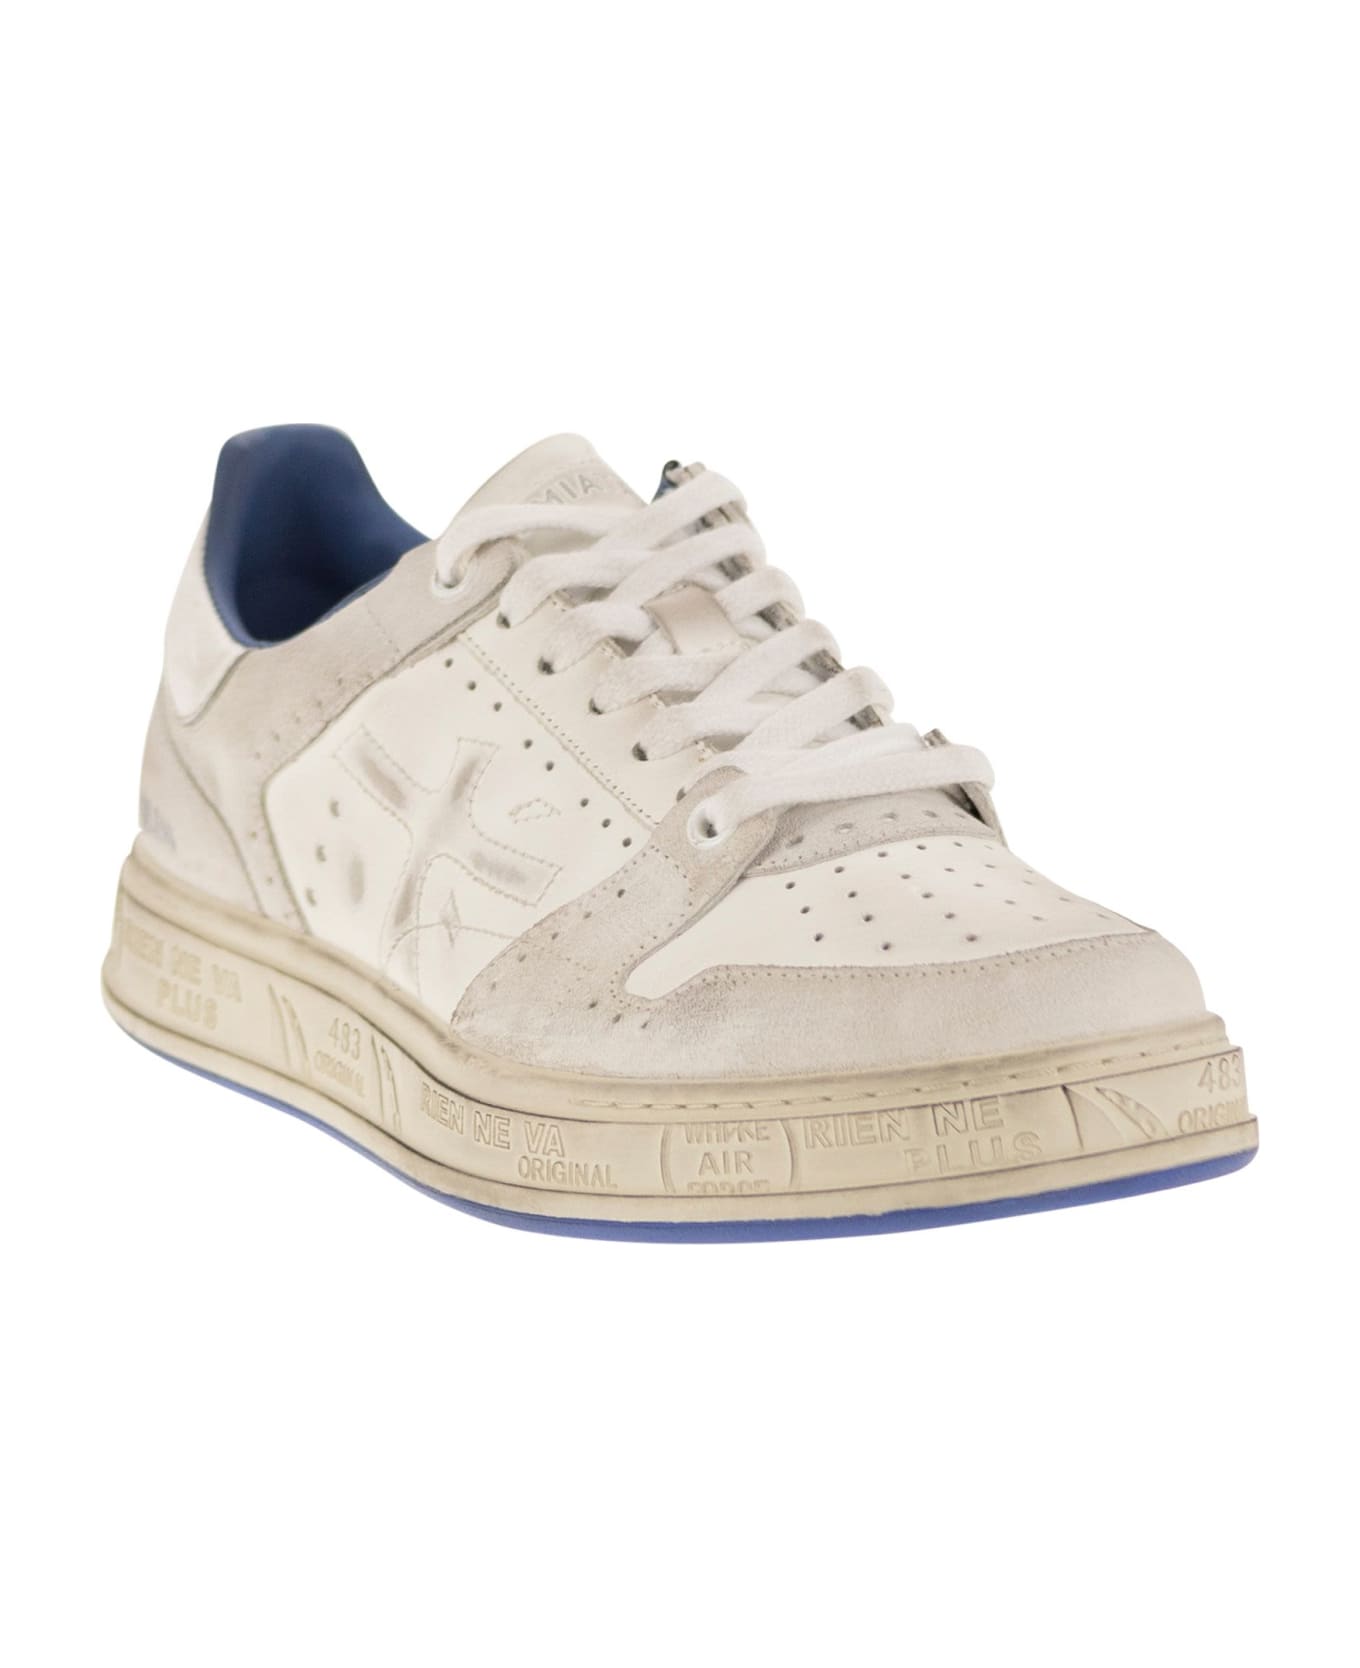 Premiata Quinn 6686 Sneakers - White